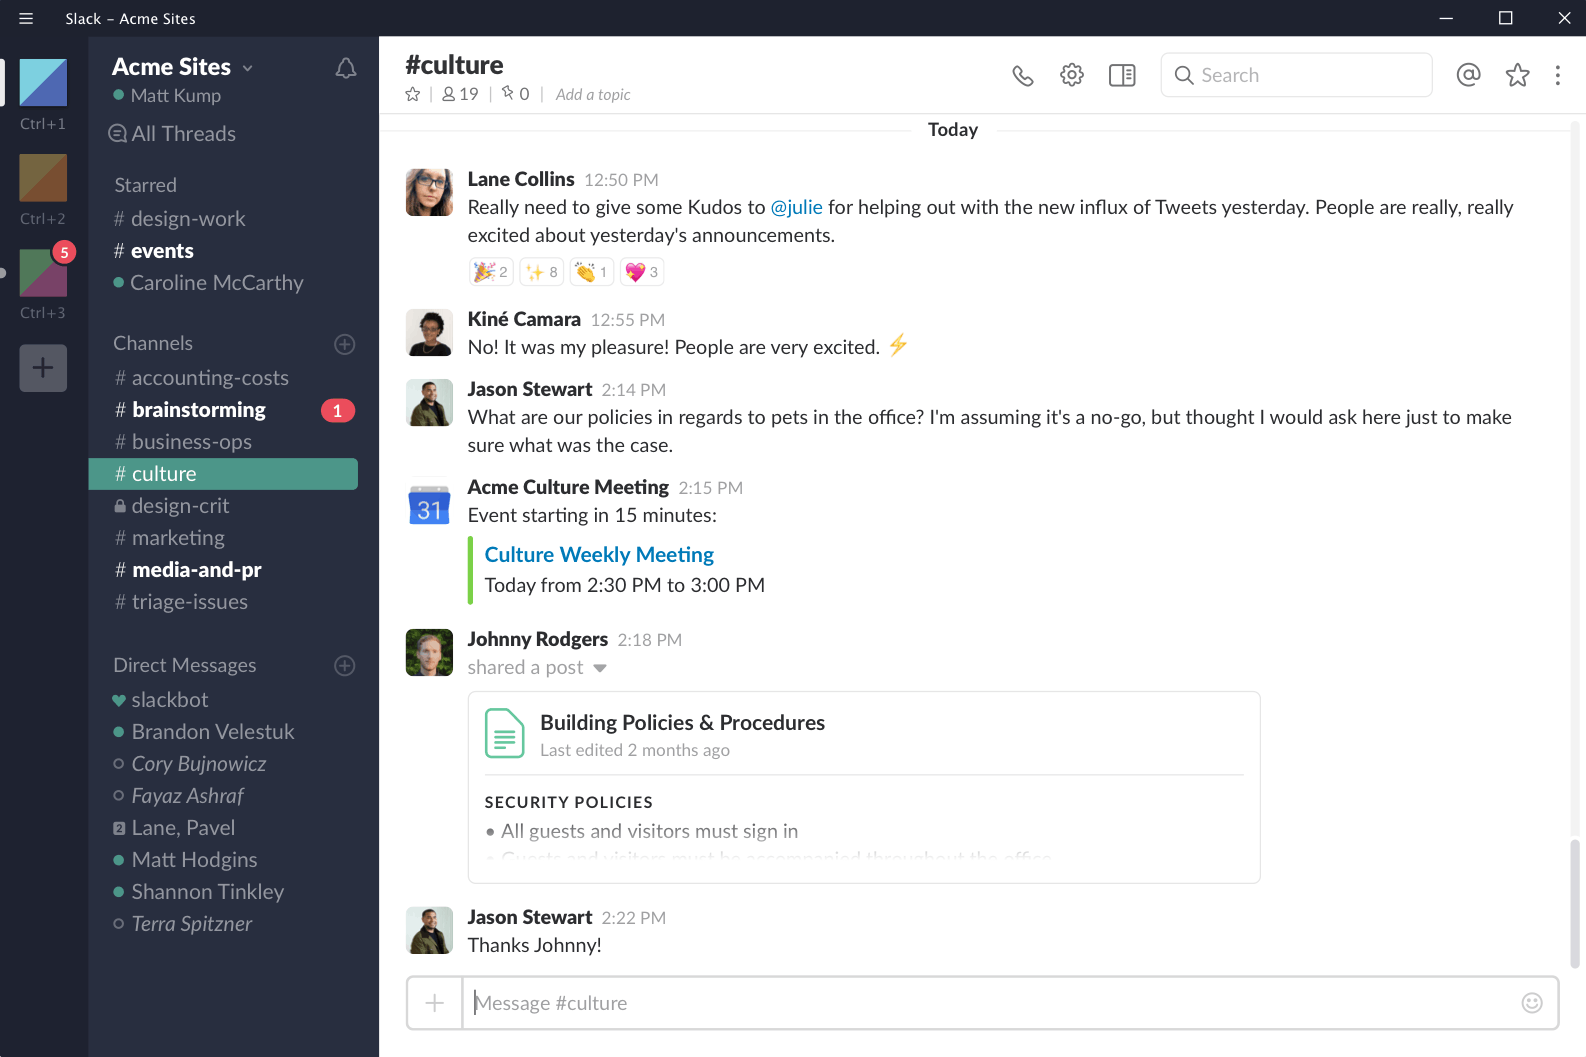 Screenshot of Slack showing chat interface